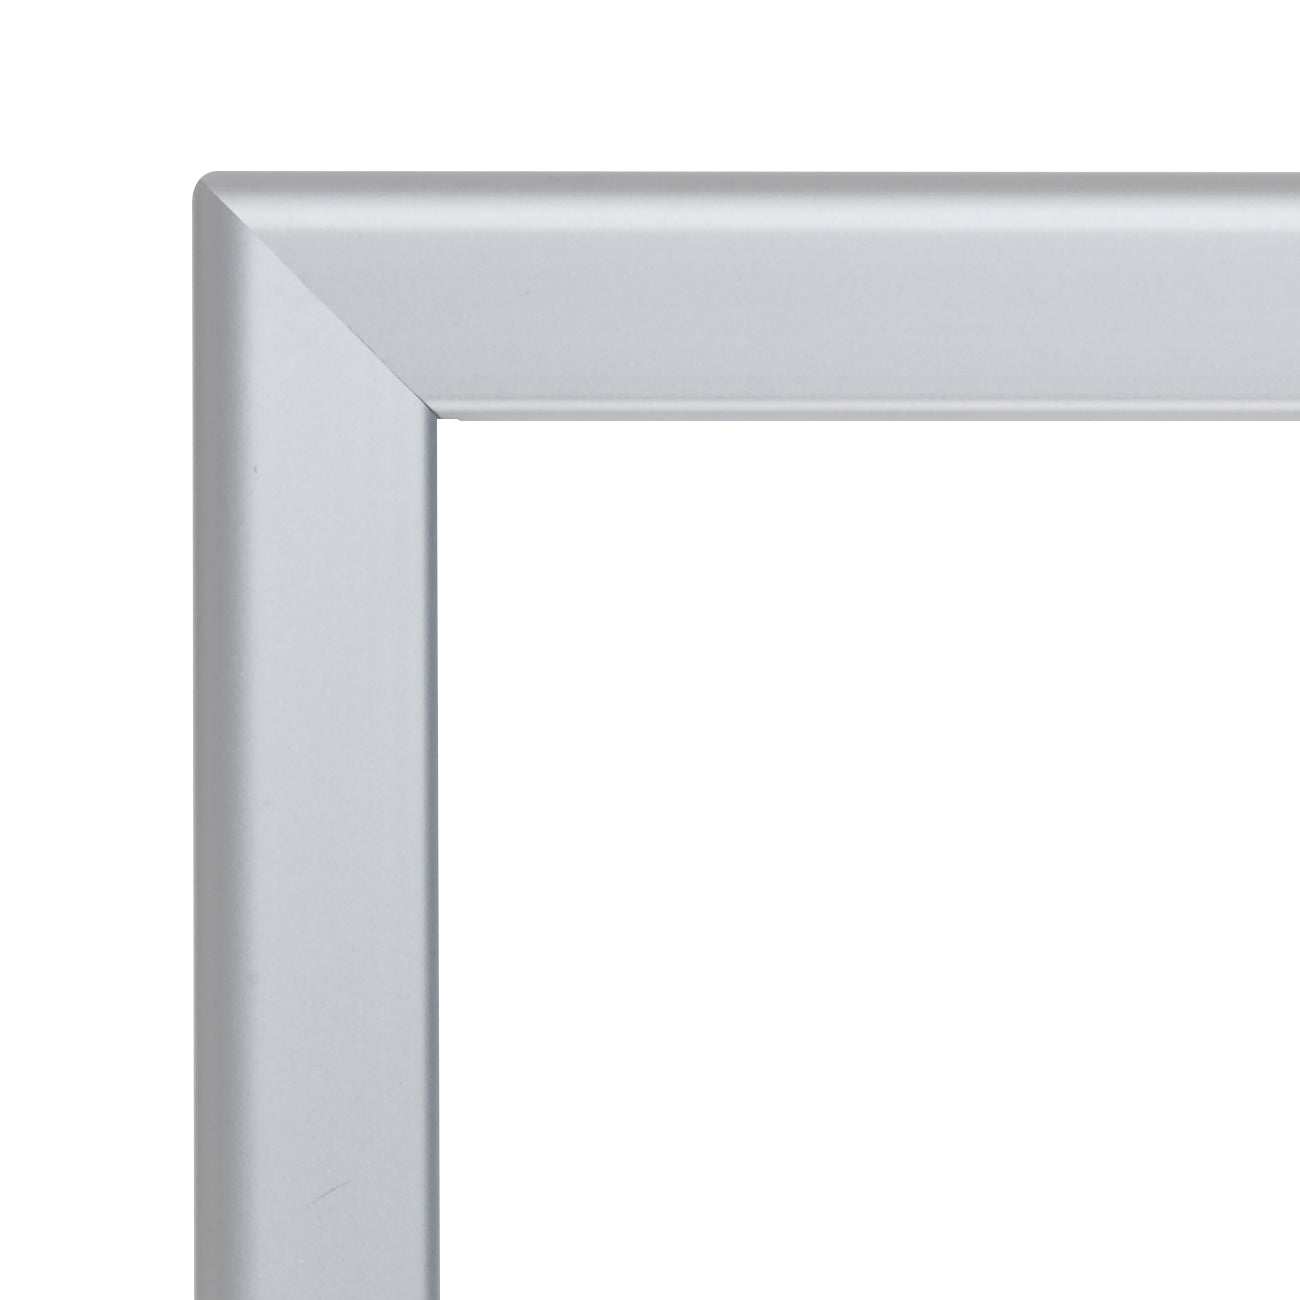 17x22 Silver SnapeZo® Snap Frame - 1.25" Profile